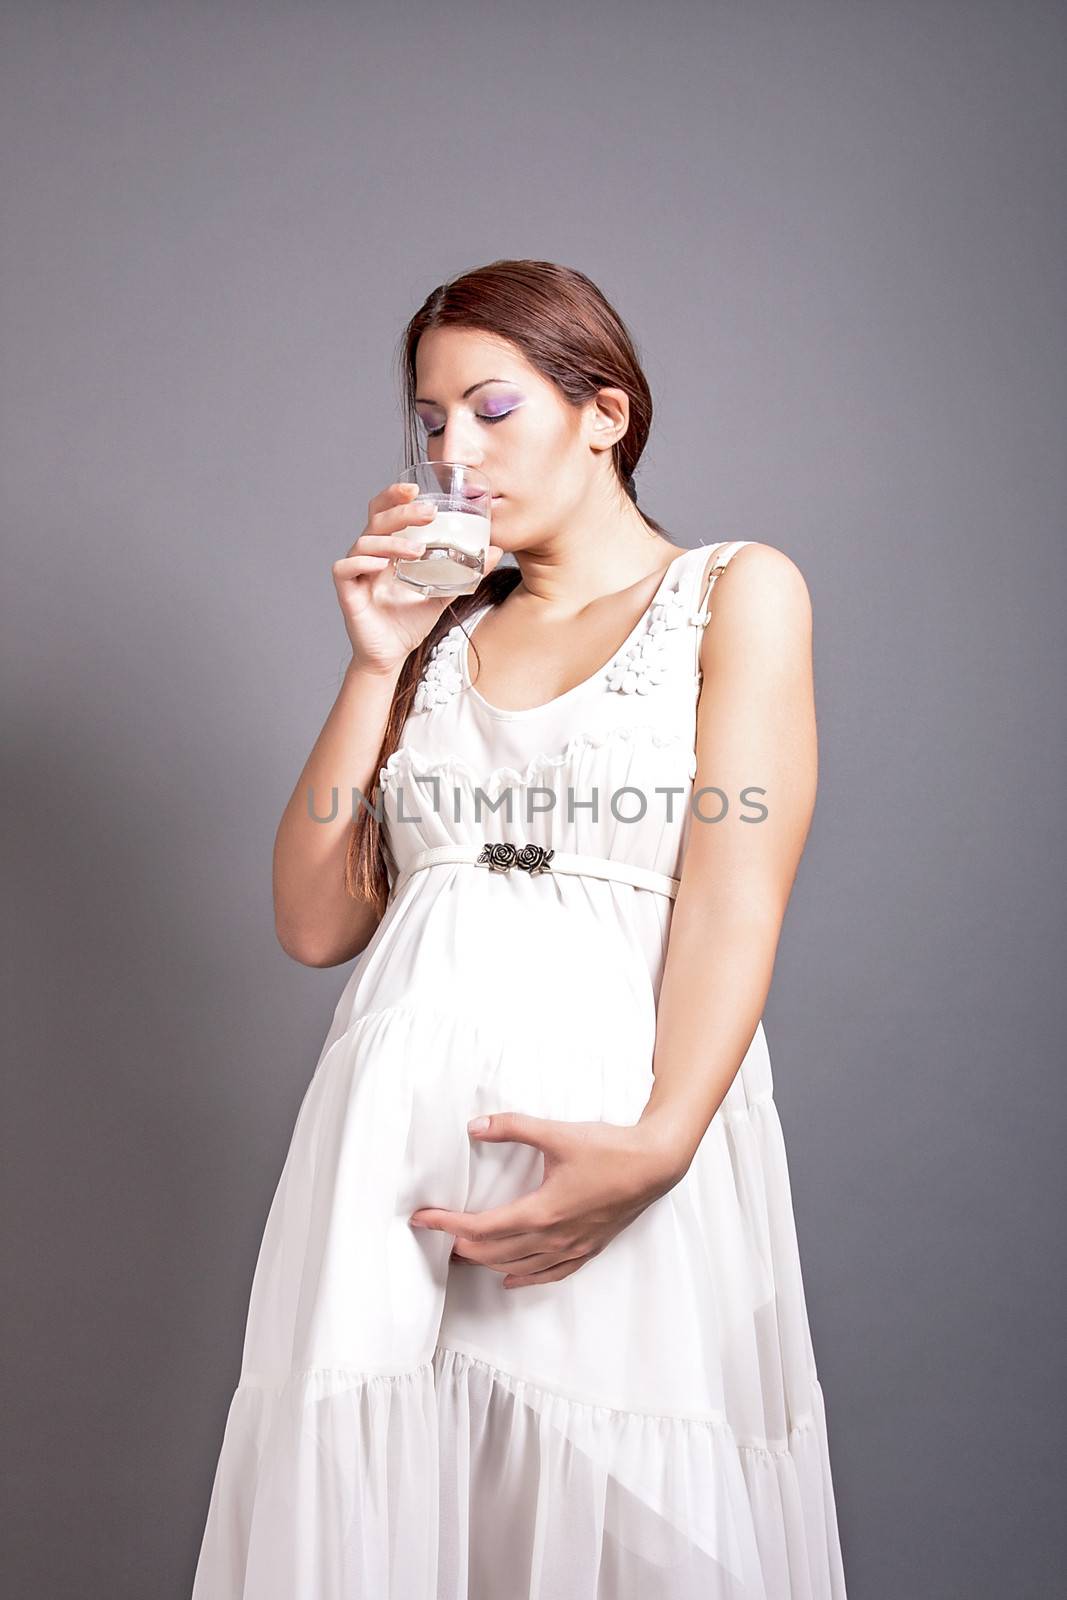 portrait of pregnant woman drinking milk